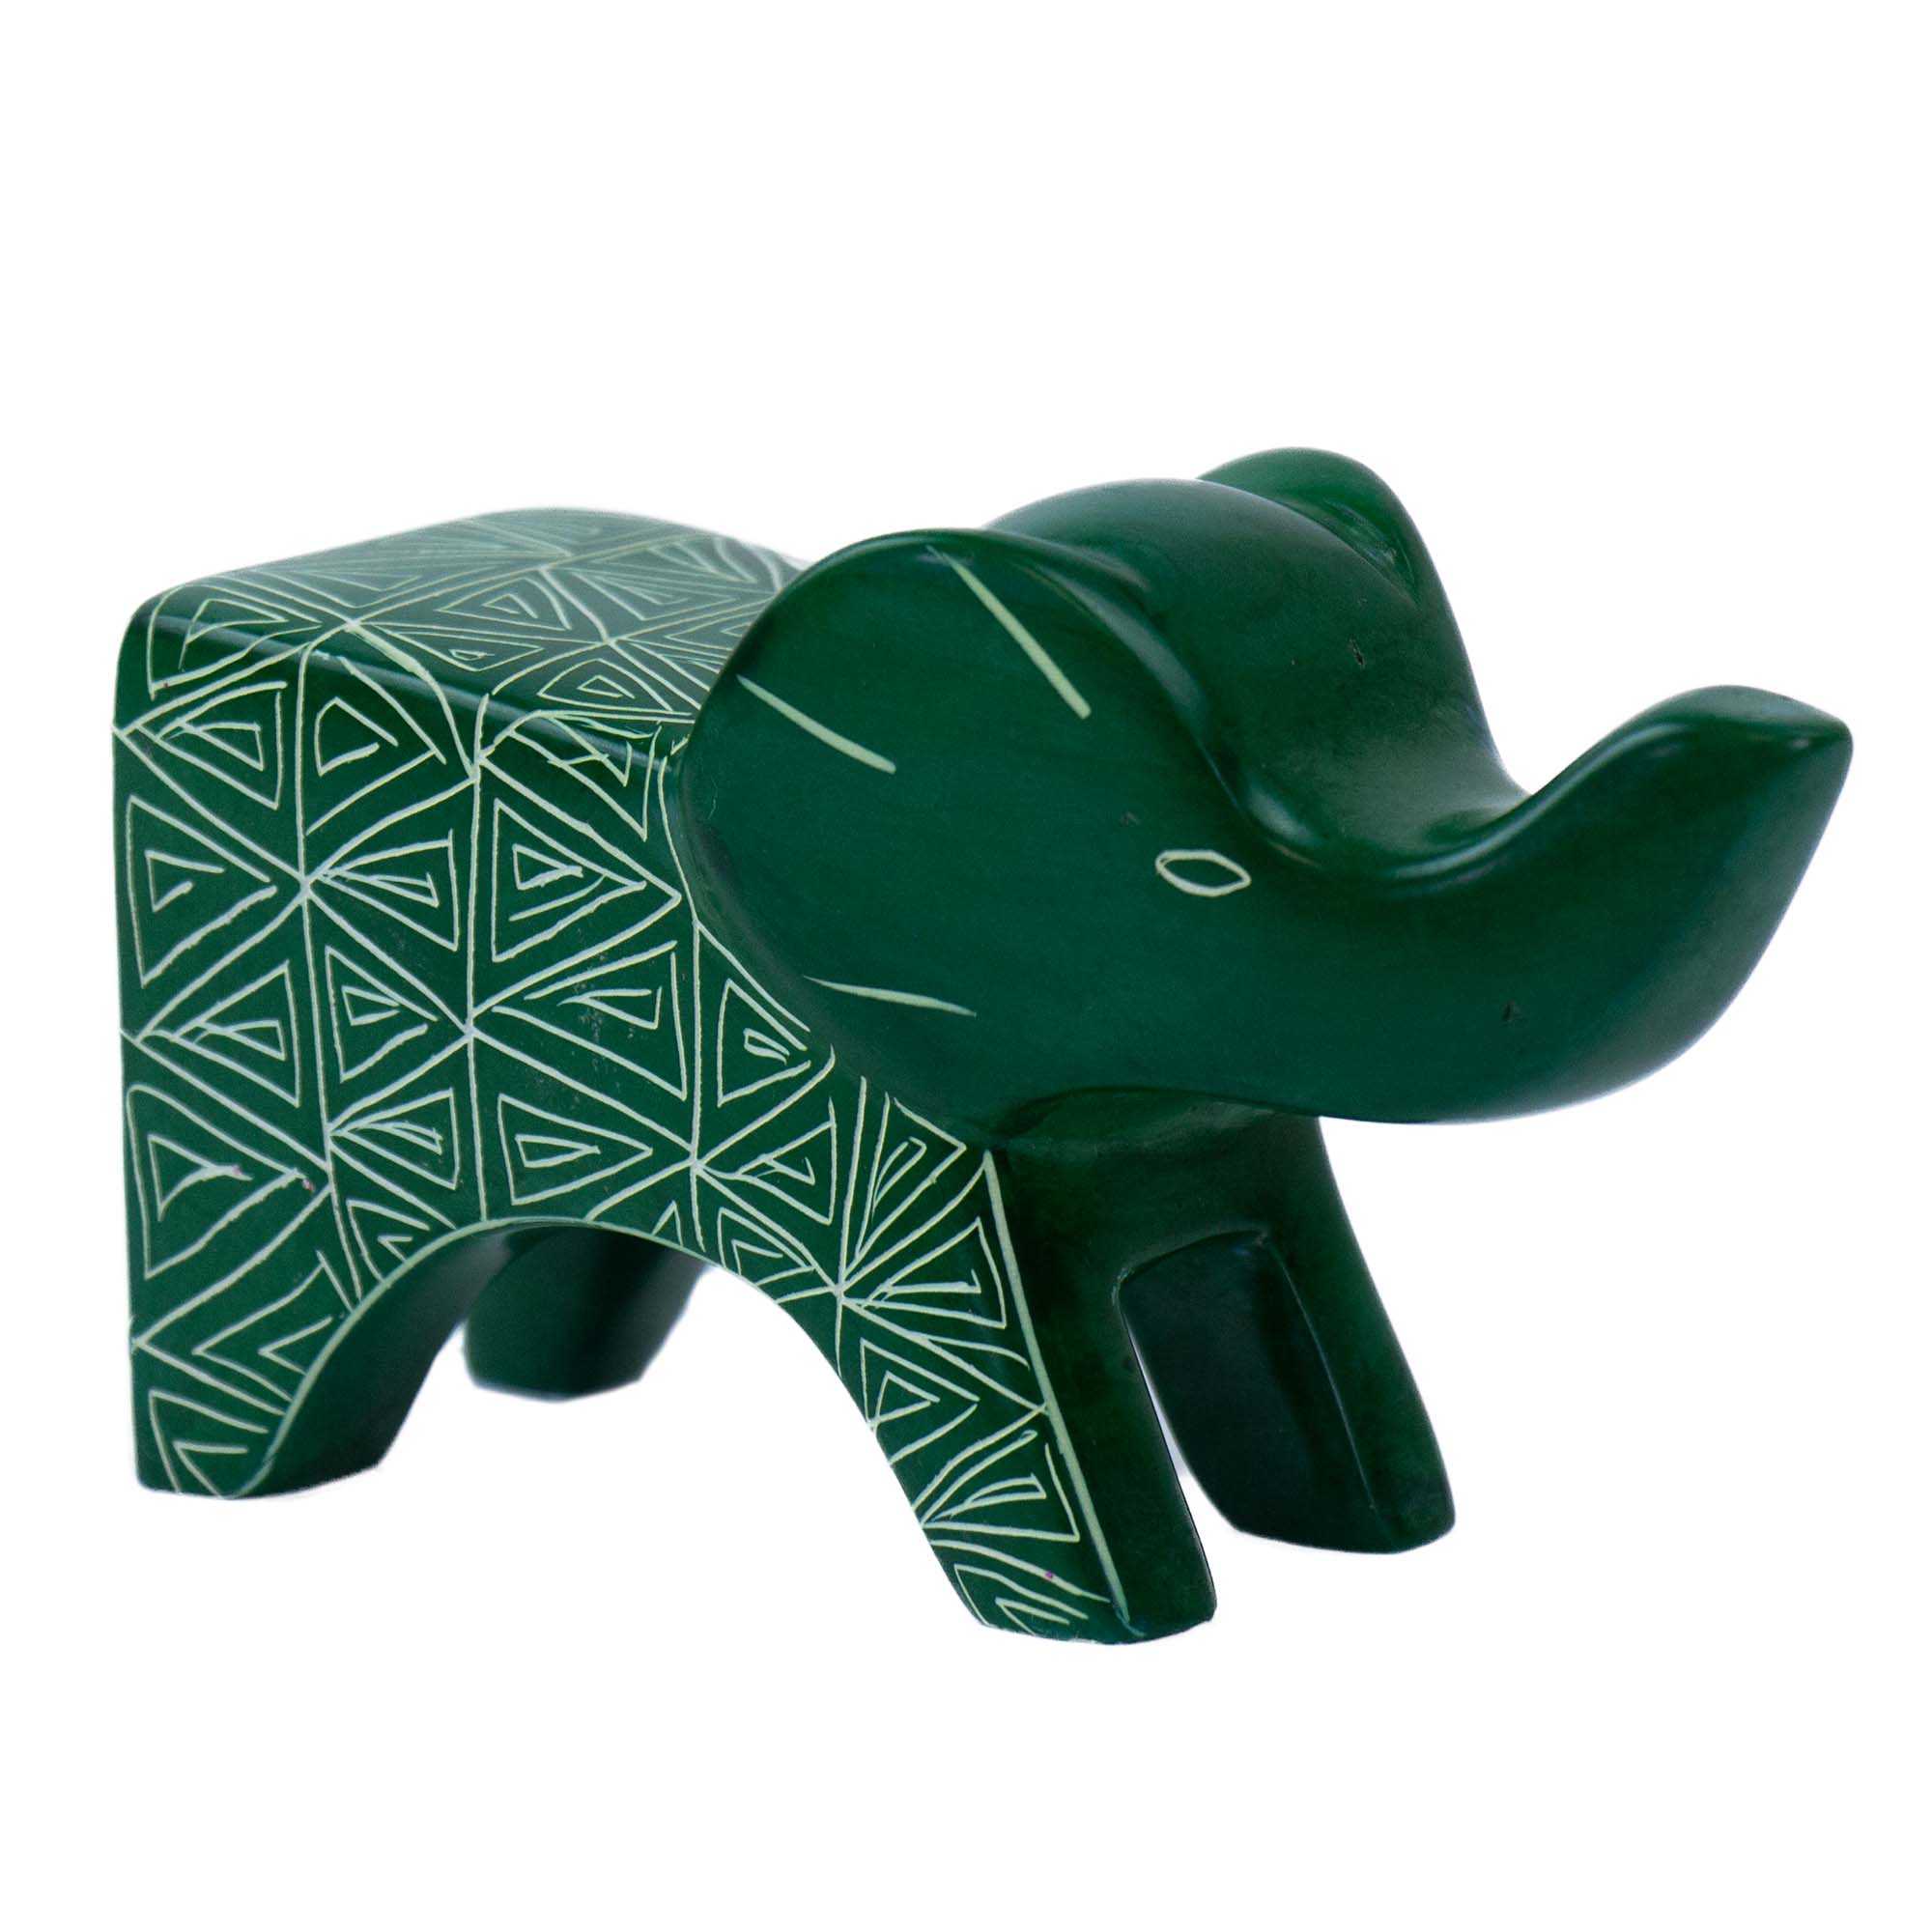 Soapstone Carving Kits: Lion & Elephant